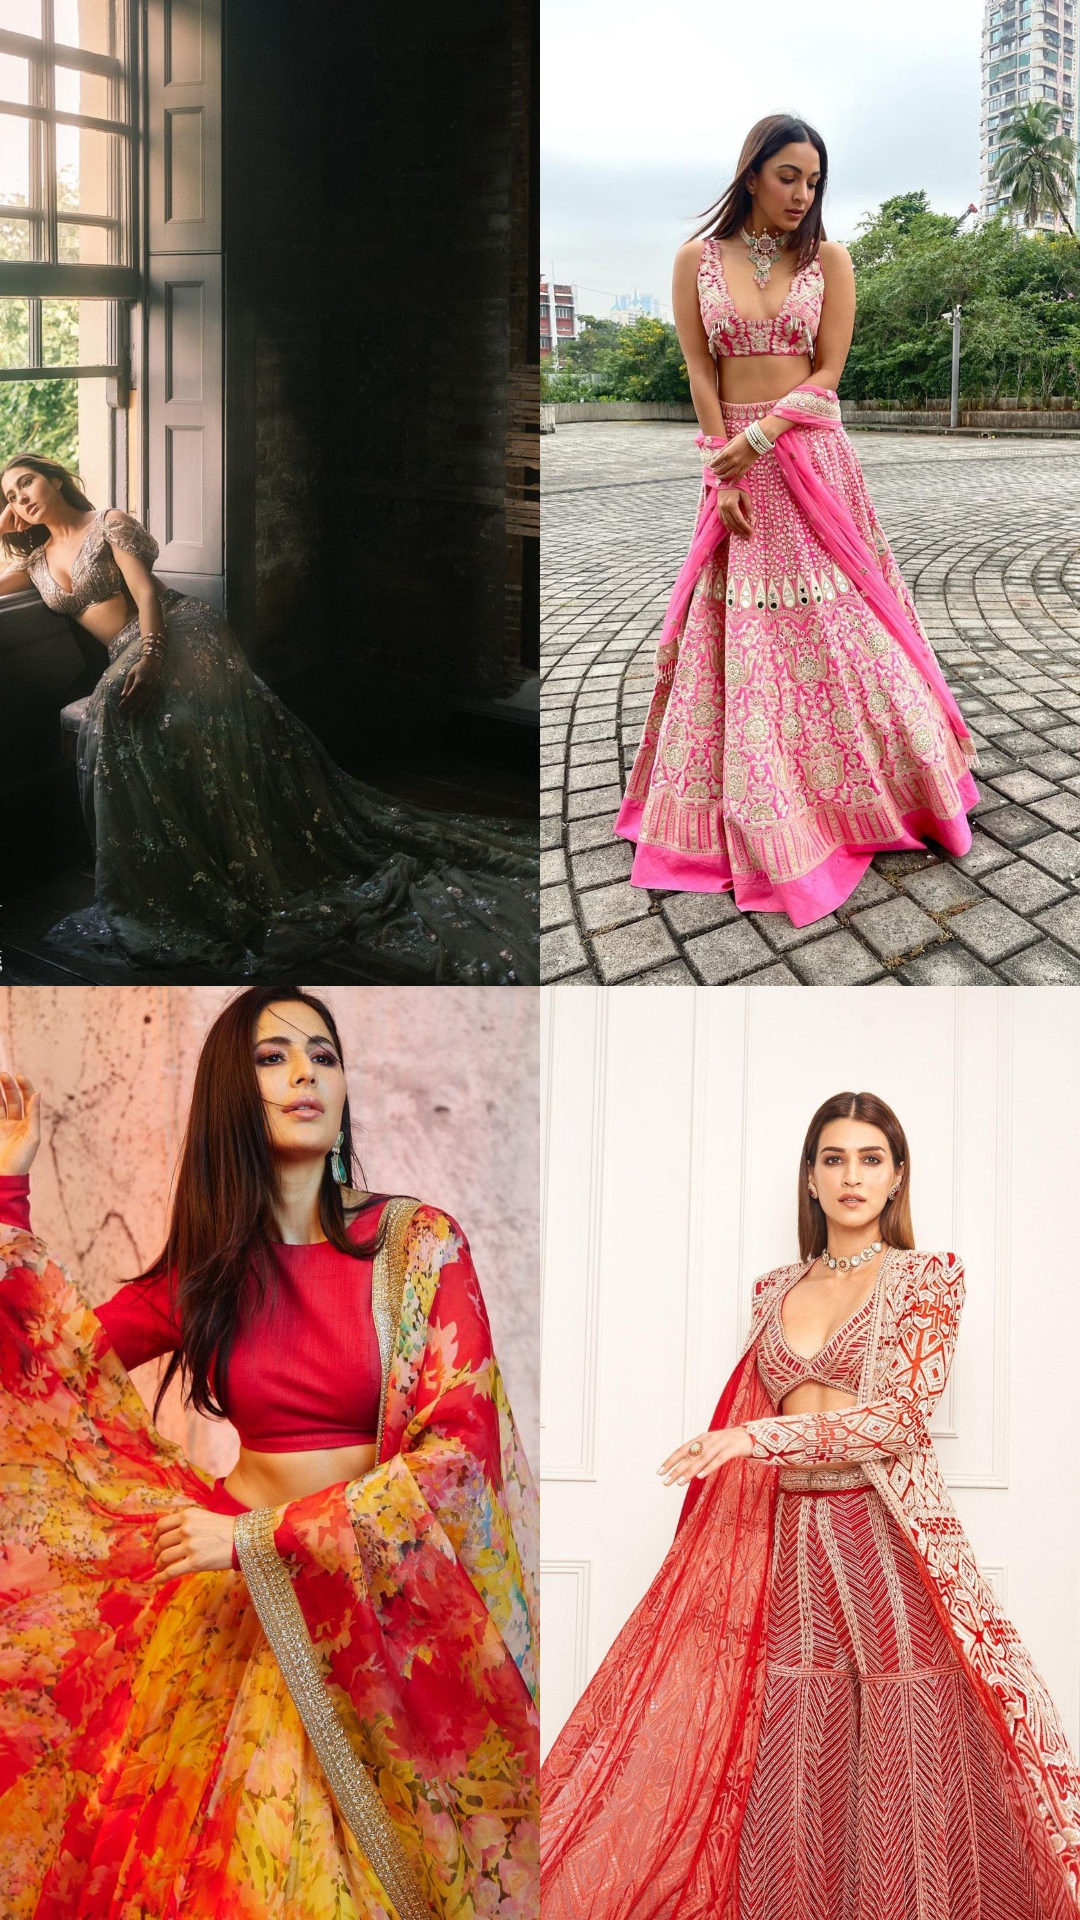 This wedding season steal the lehenga looks from Bollywood divas